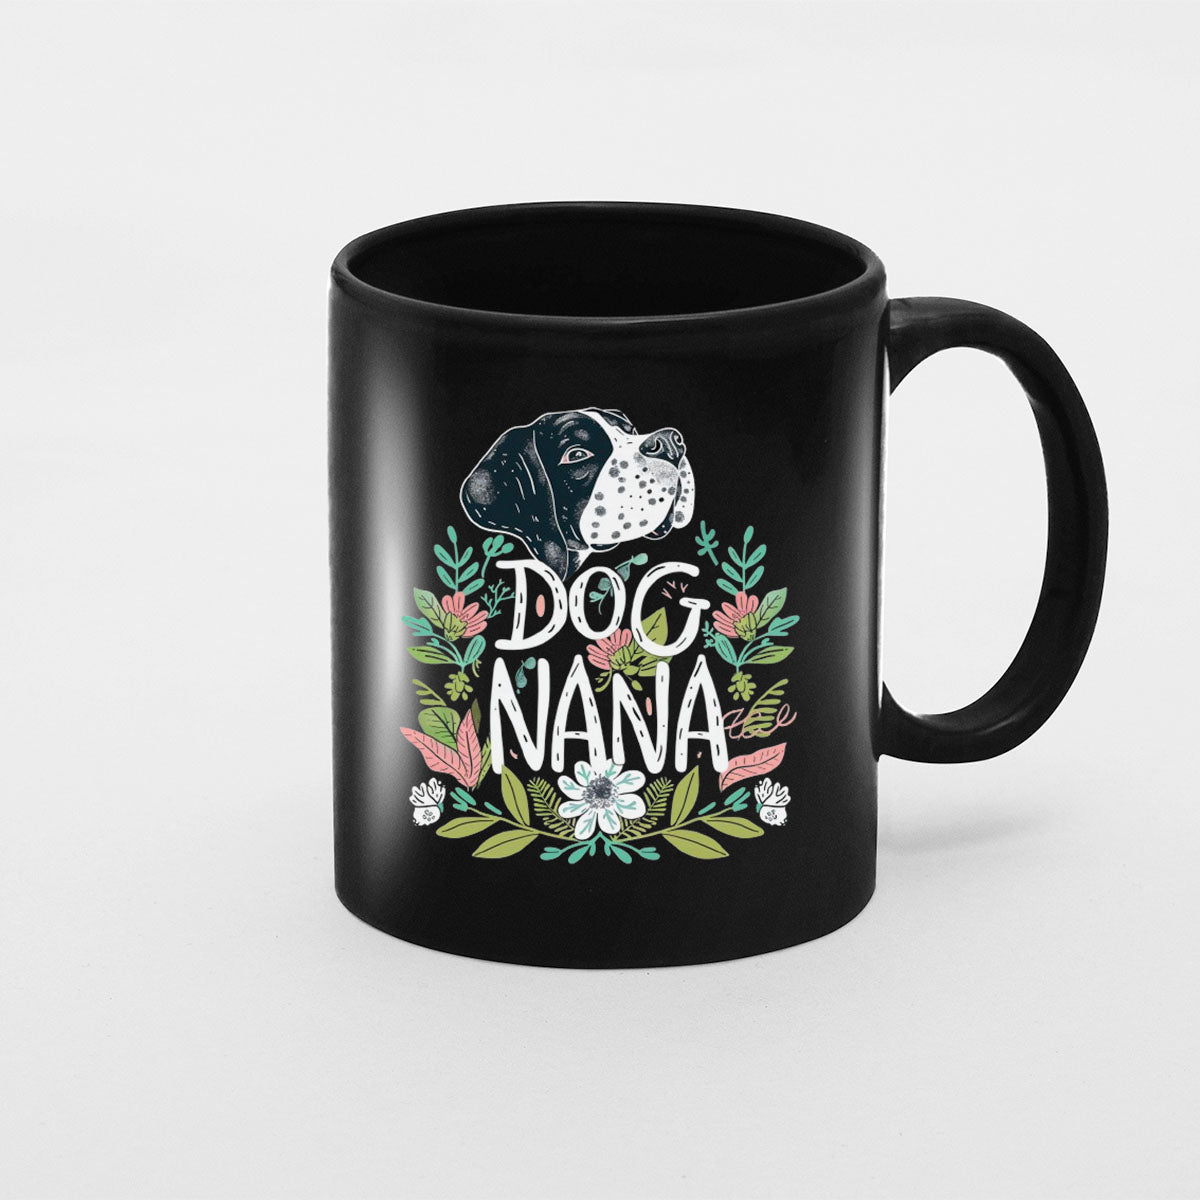 Grandma Mug, Grandma Gift For Grandma Birthday Gift Personalized Grandma Coffee Cup, Mothers Day Gift From Granddaughter Grandson, Dog Nana 2